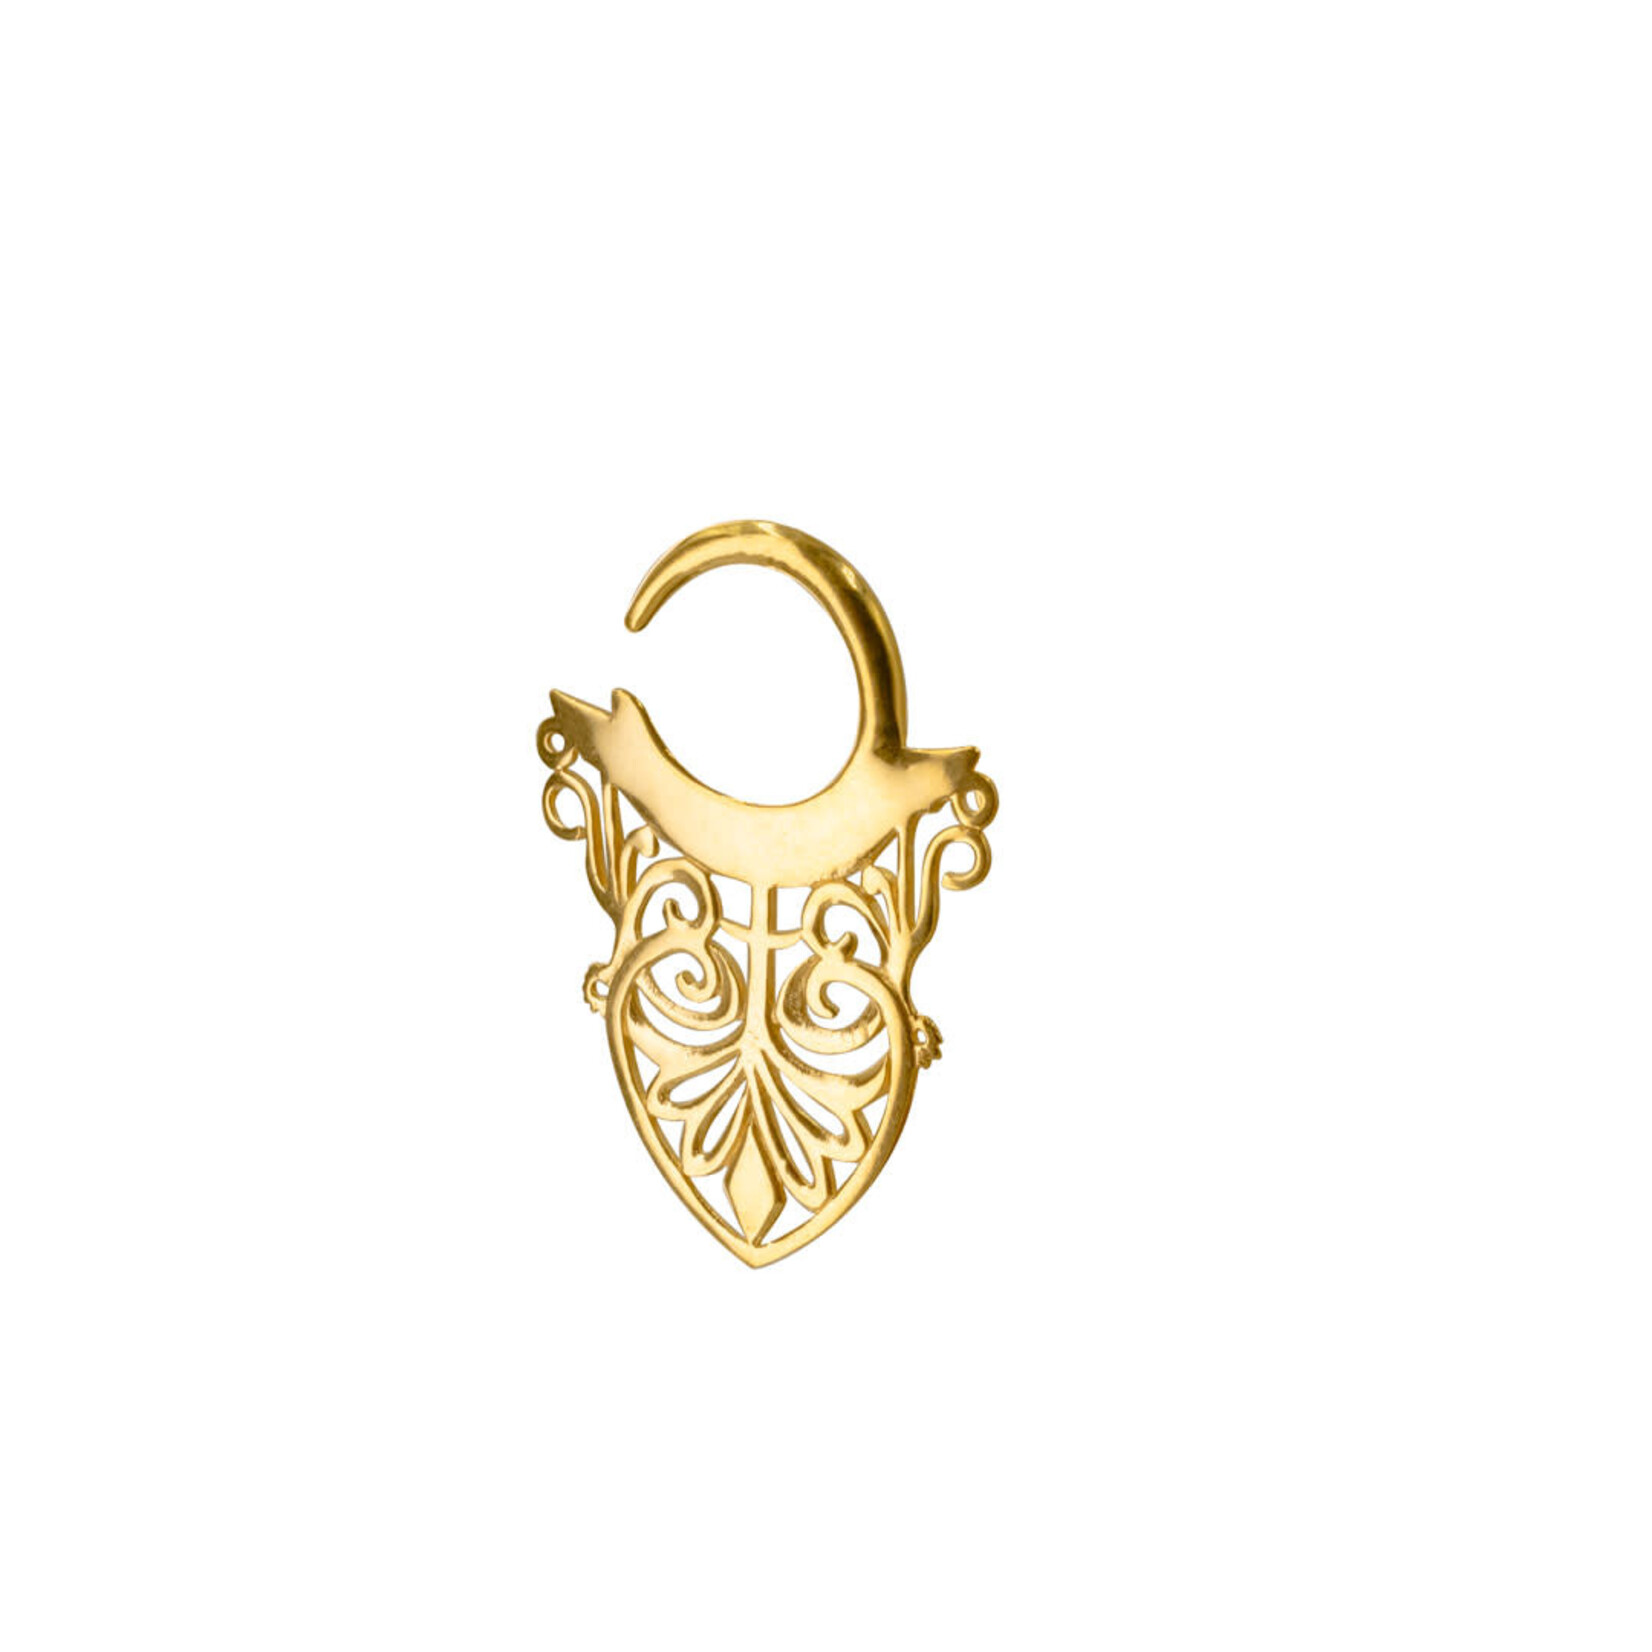 Evolve Body Jewelry Evolve brass hanging design